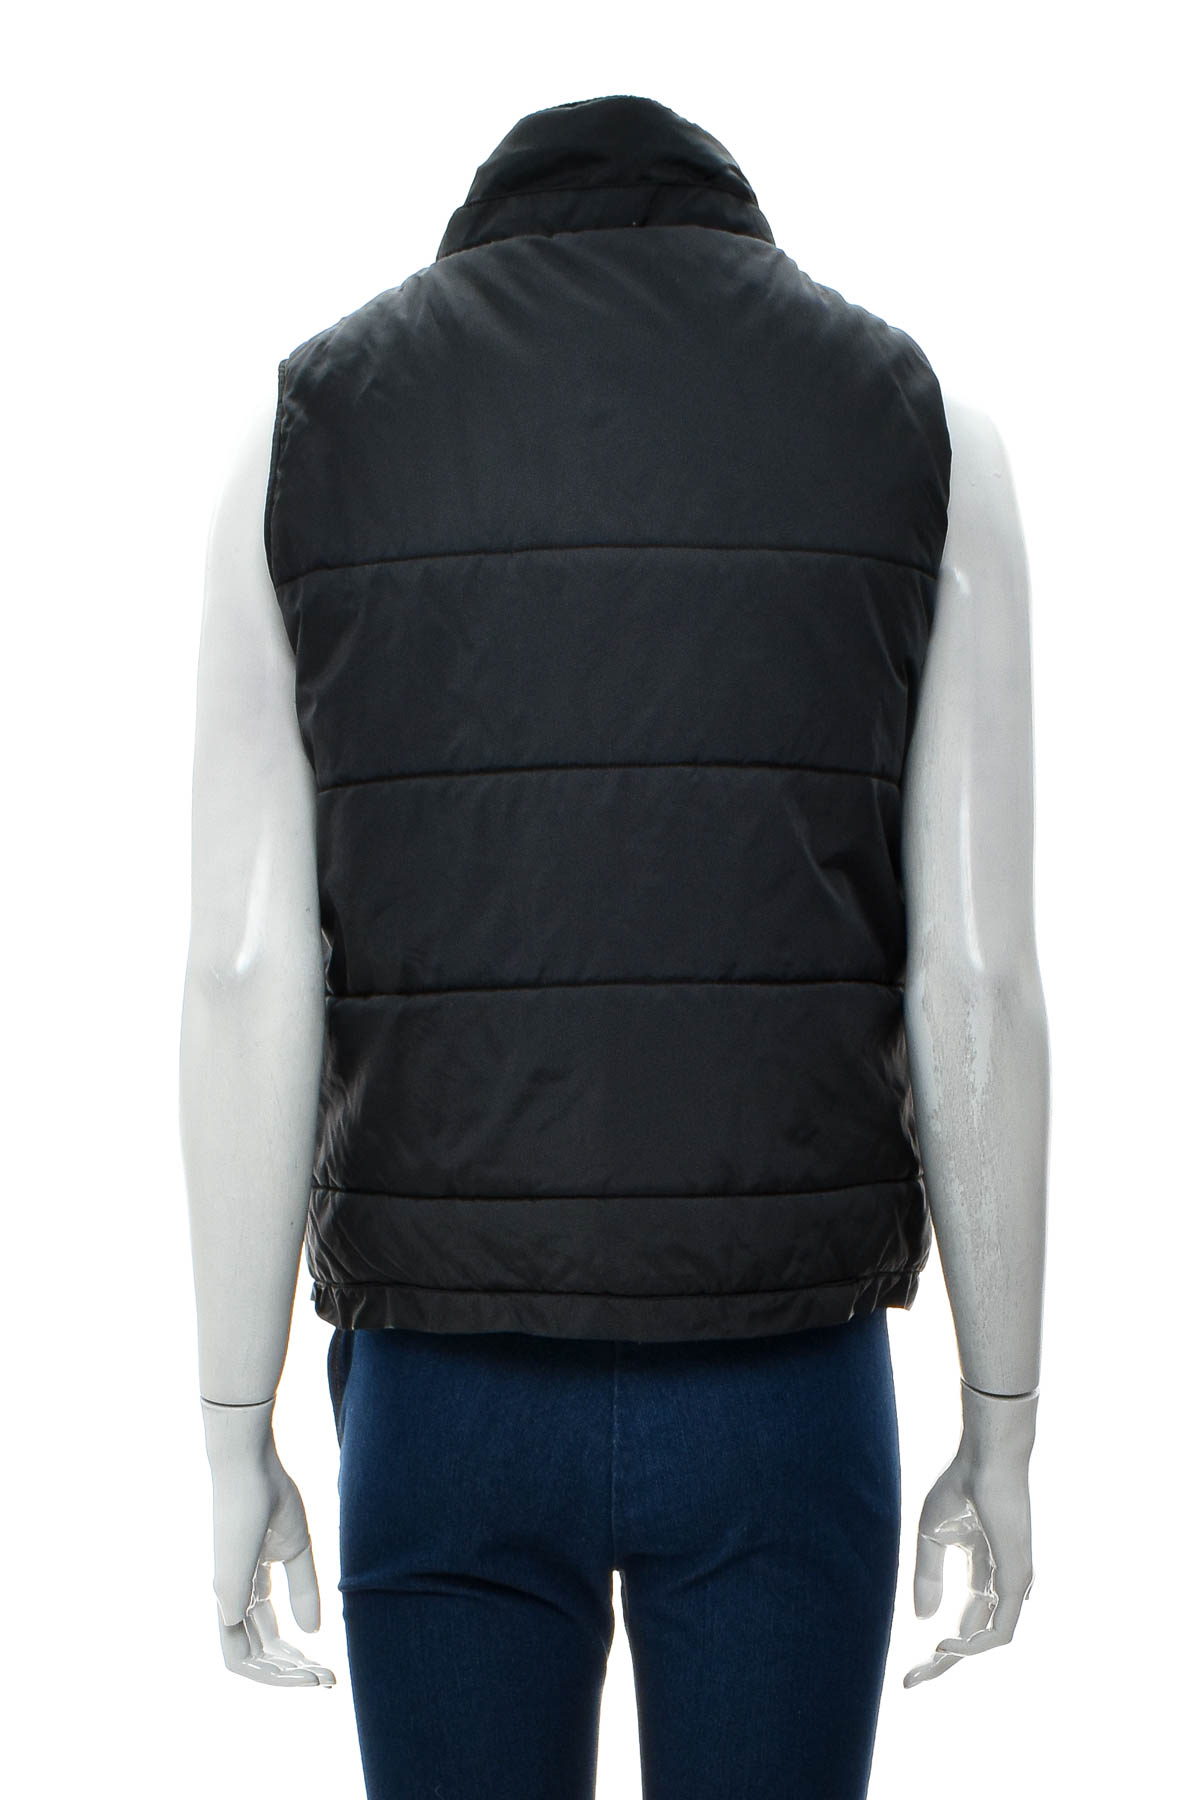 Women's vest - ROXY - 1